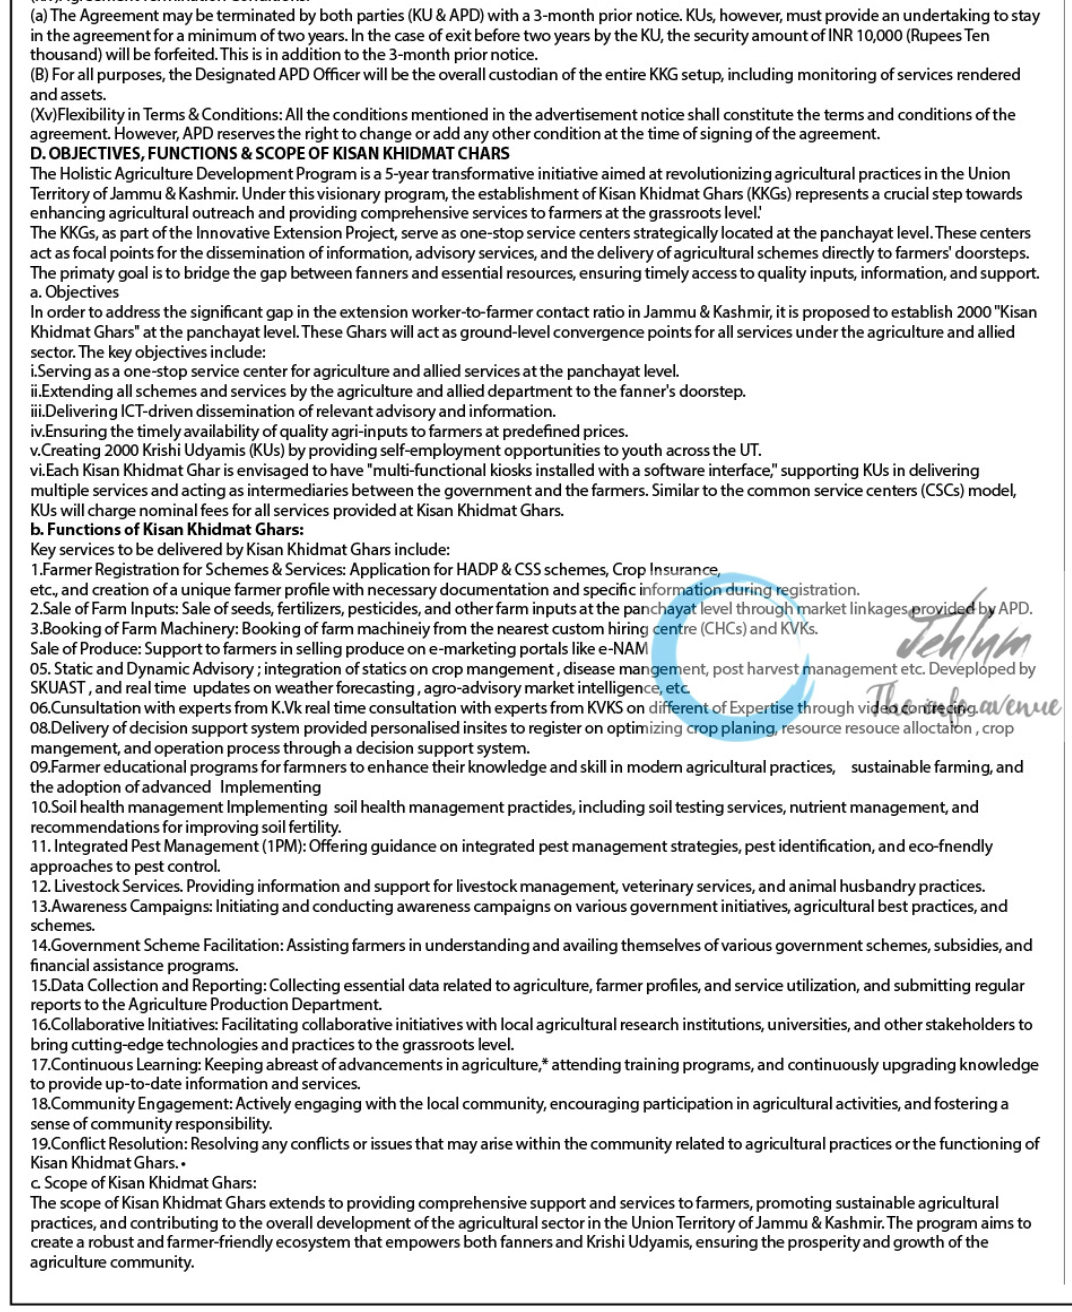 District Development Commissioner Bandipora Krishi Udyamis KU Recruitment Notification 2024